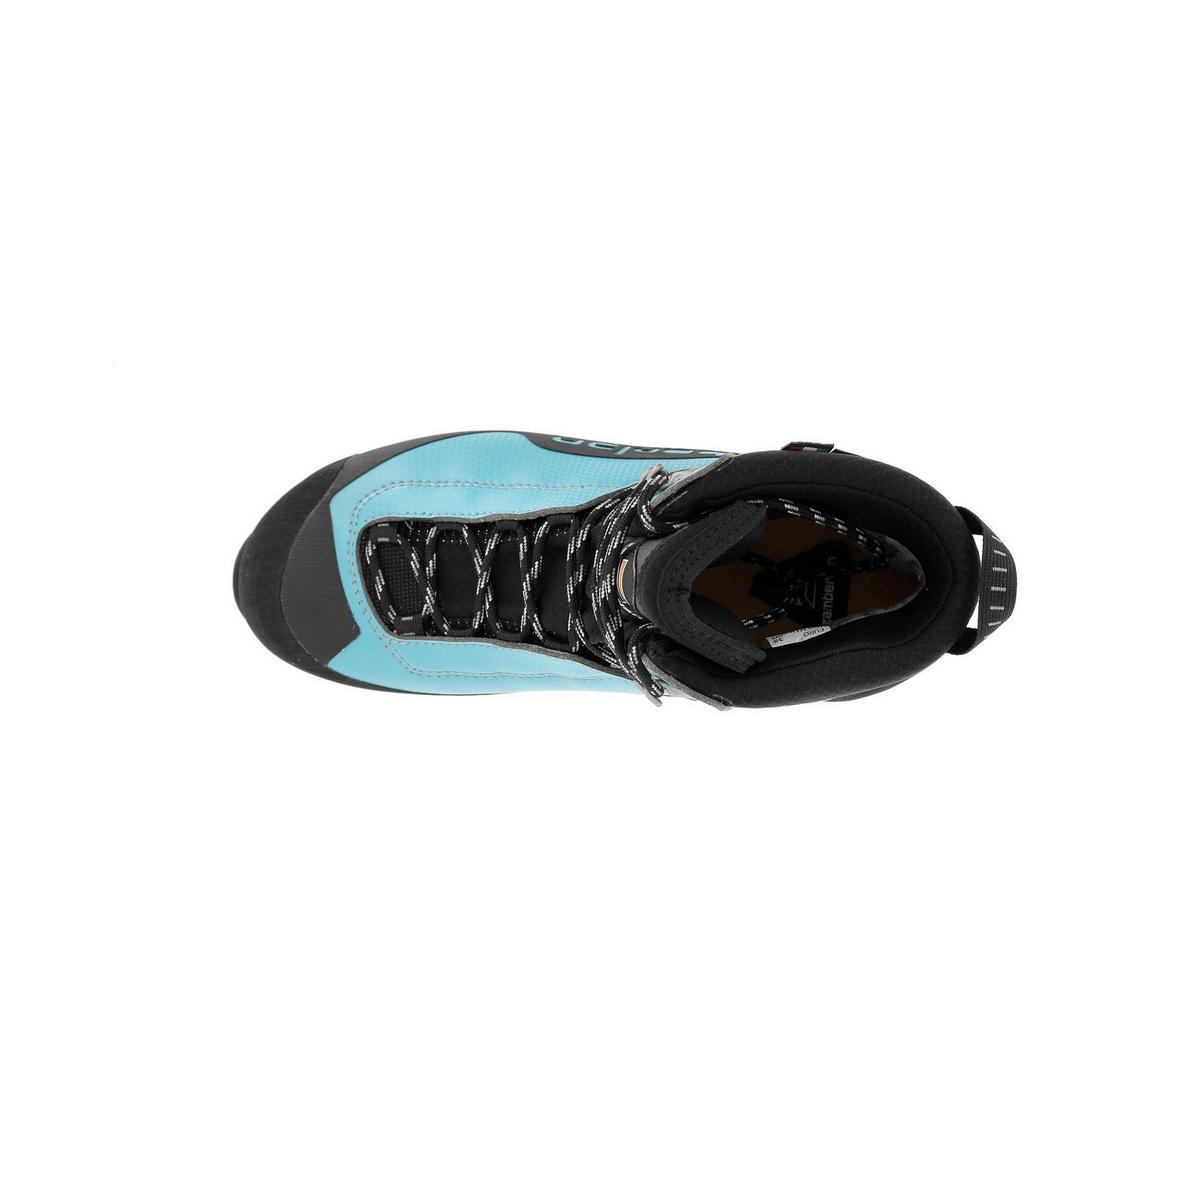 Zamberlan Women's Brenva GORE-TEX RR Mountaineering Boots - Blue